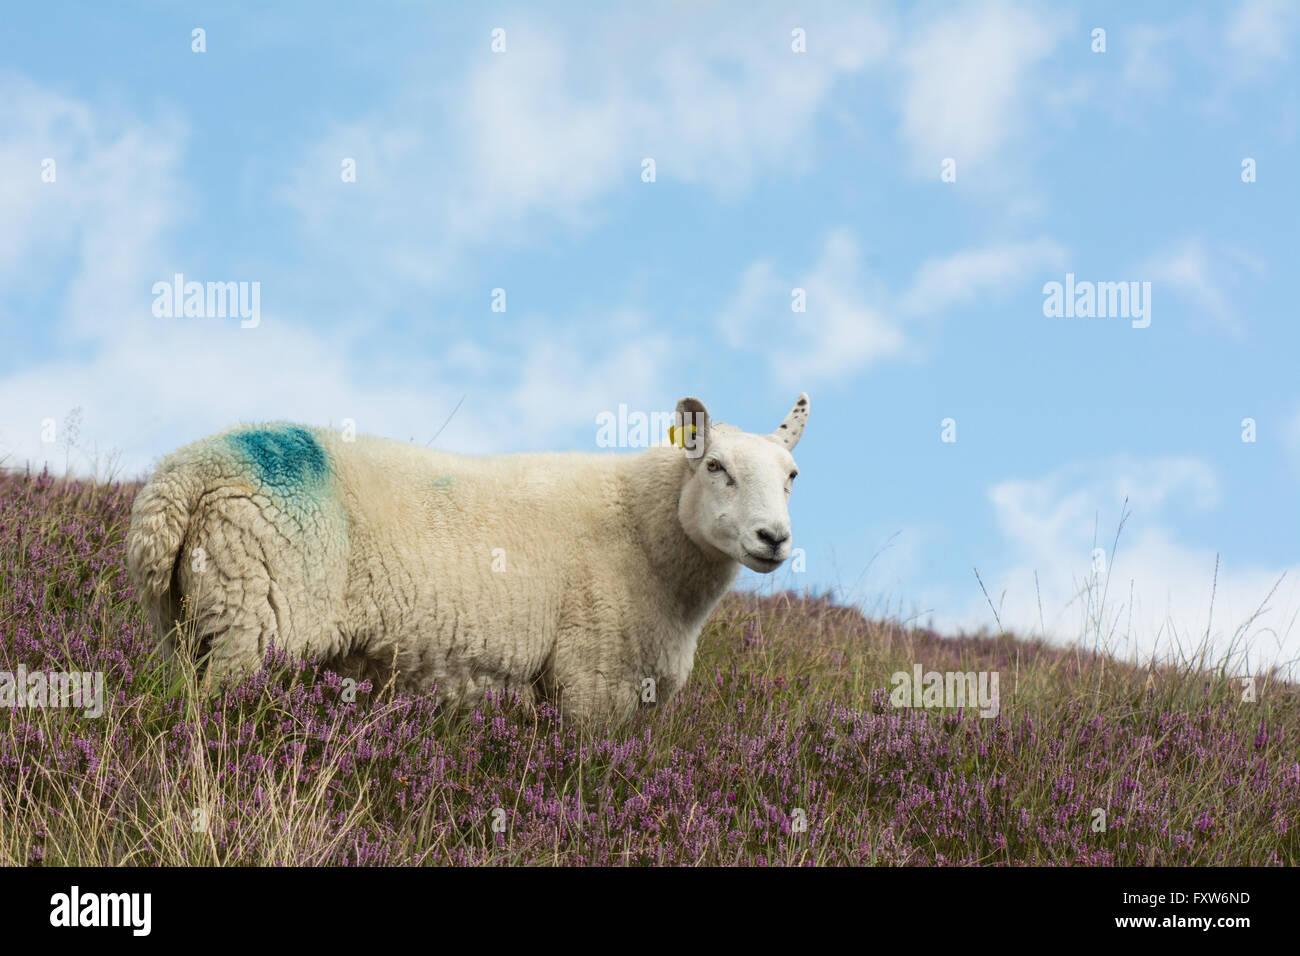 A sheep in purple heather on hillside Stock Photo